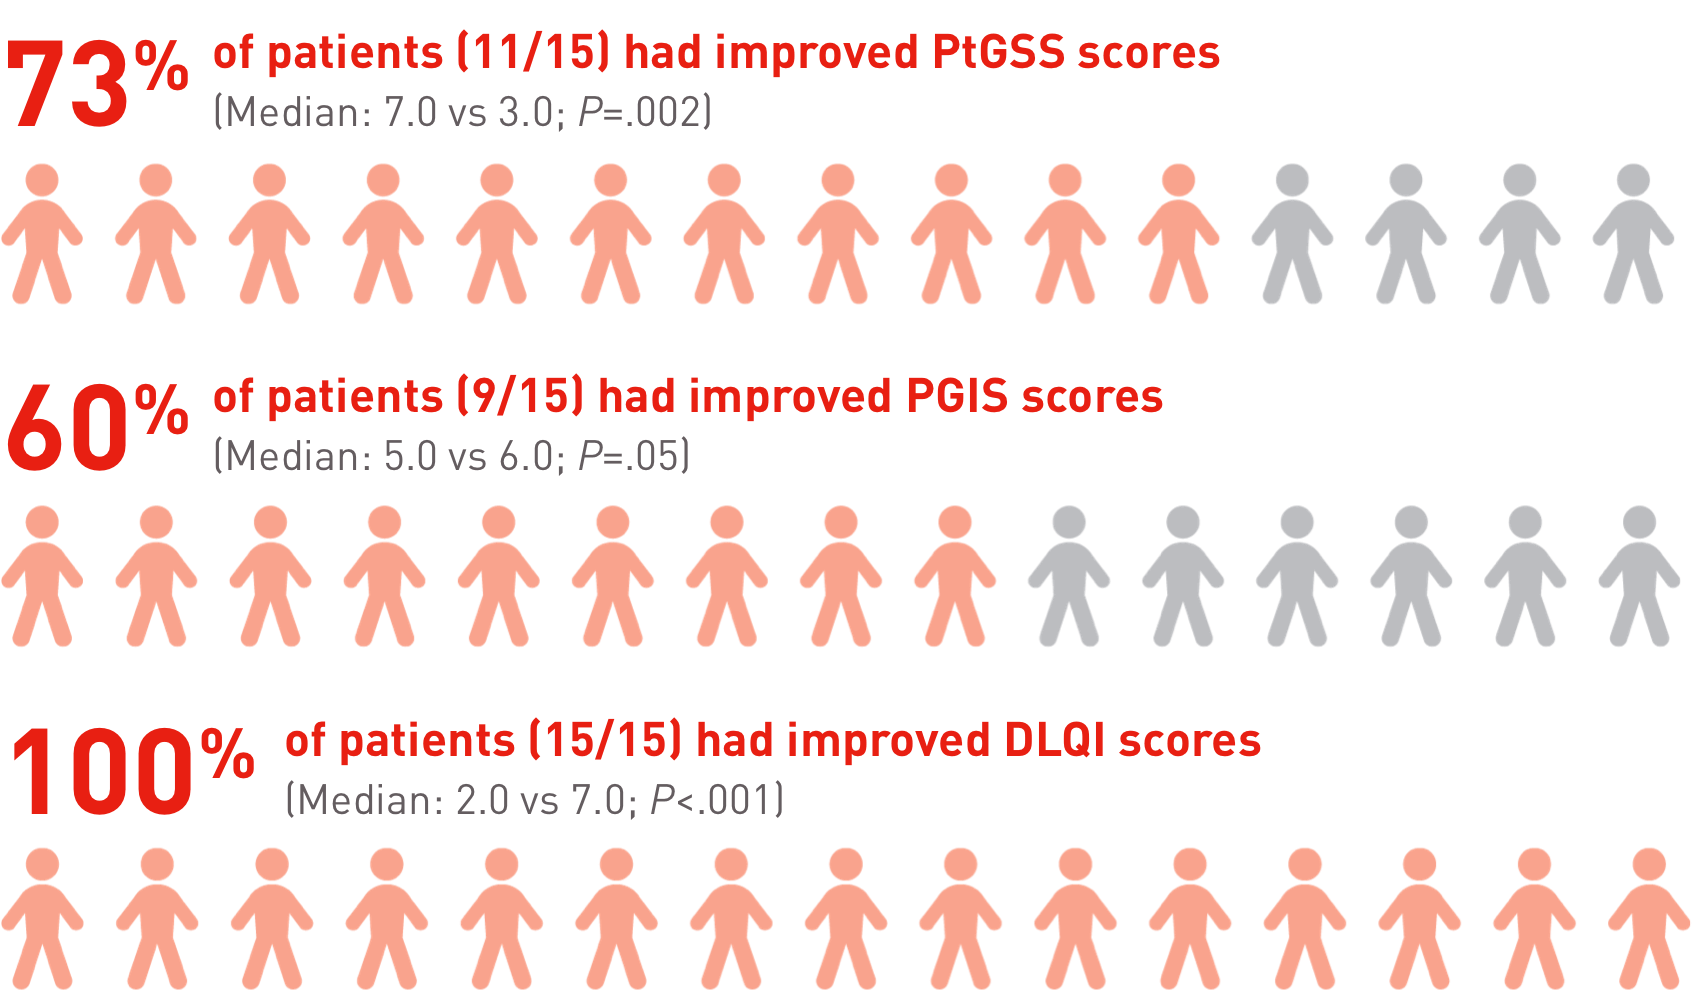 Acthar Gel DM patients with improved PtGSS, PGIS, or DLQI scores